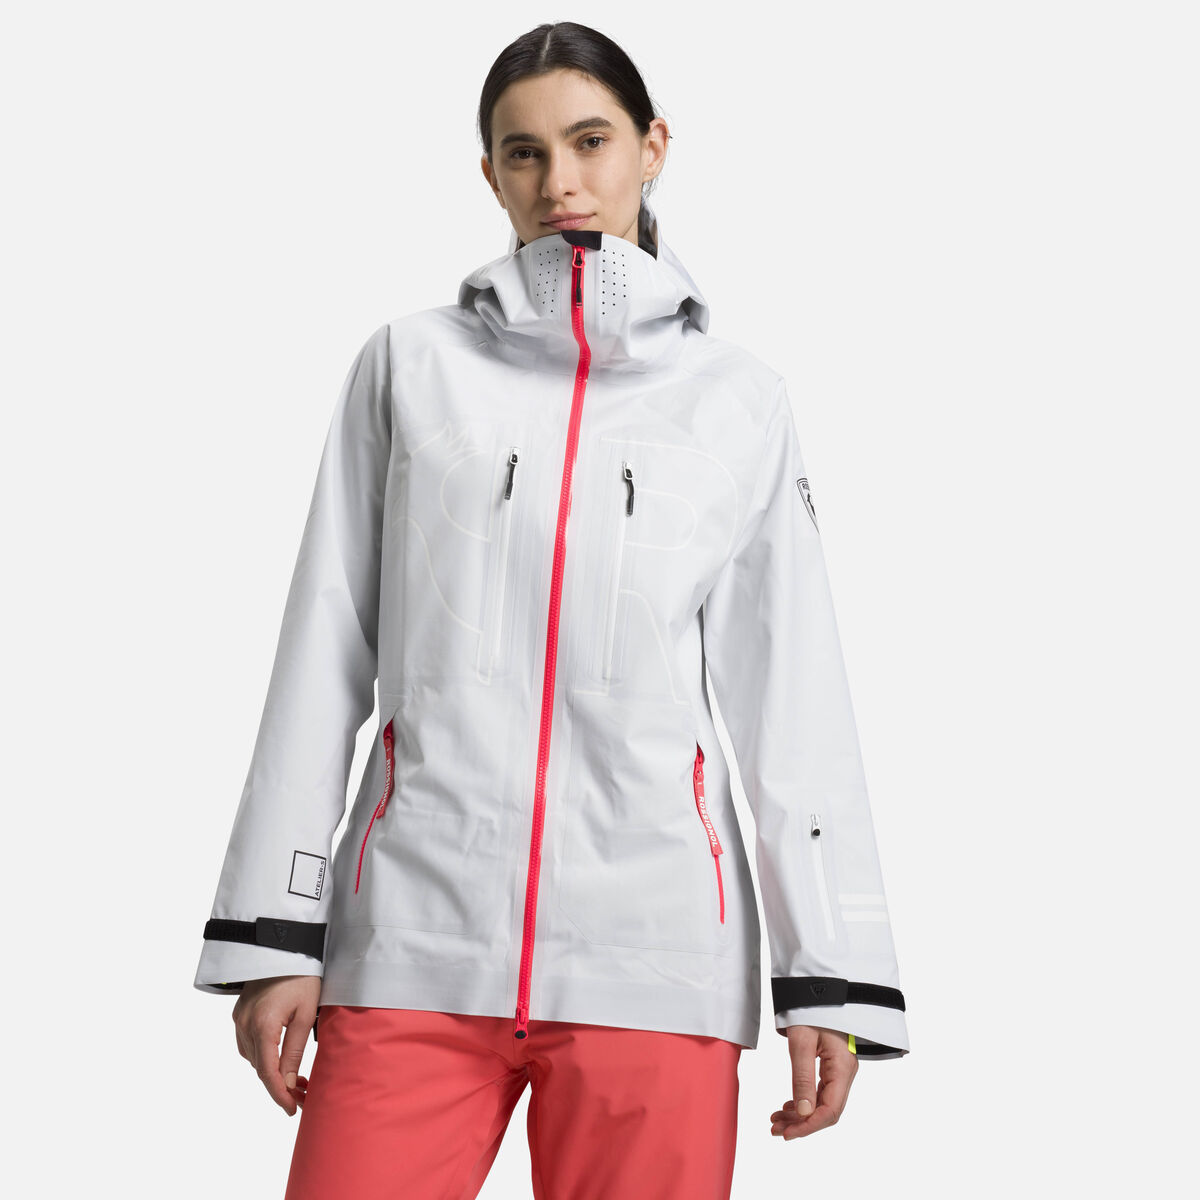 Women's Atelier S ski/snowboard jacket